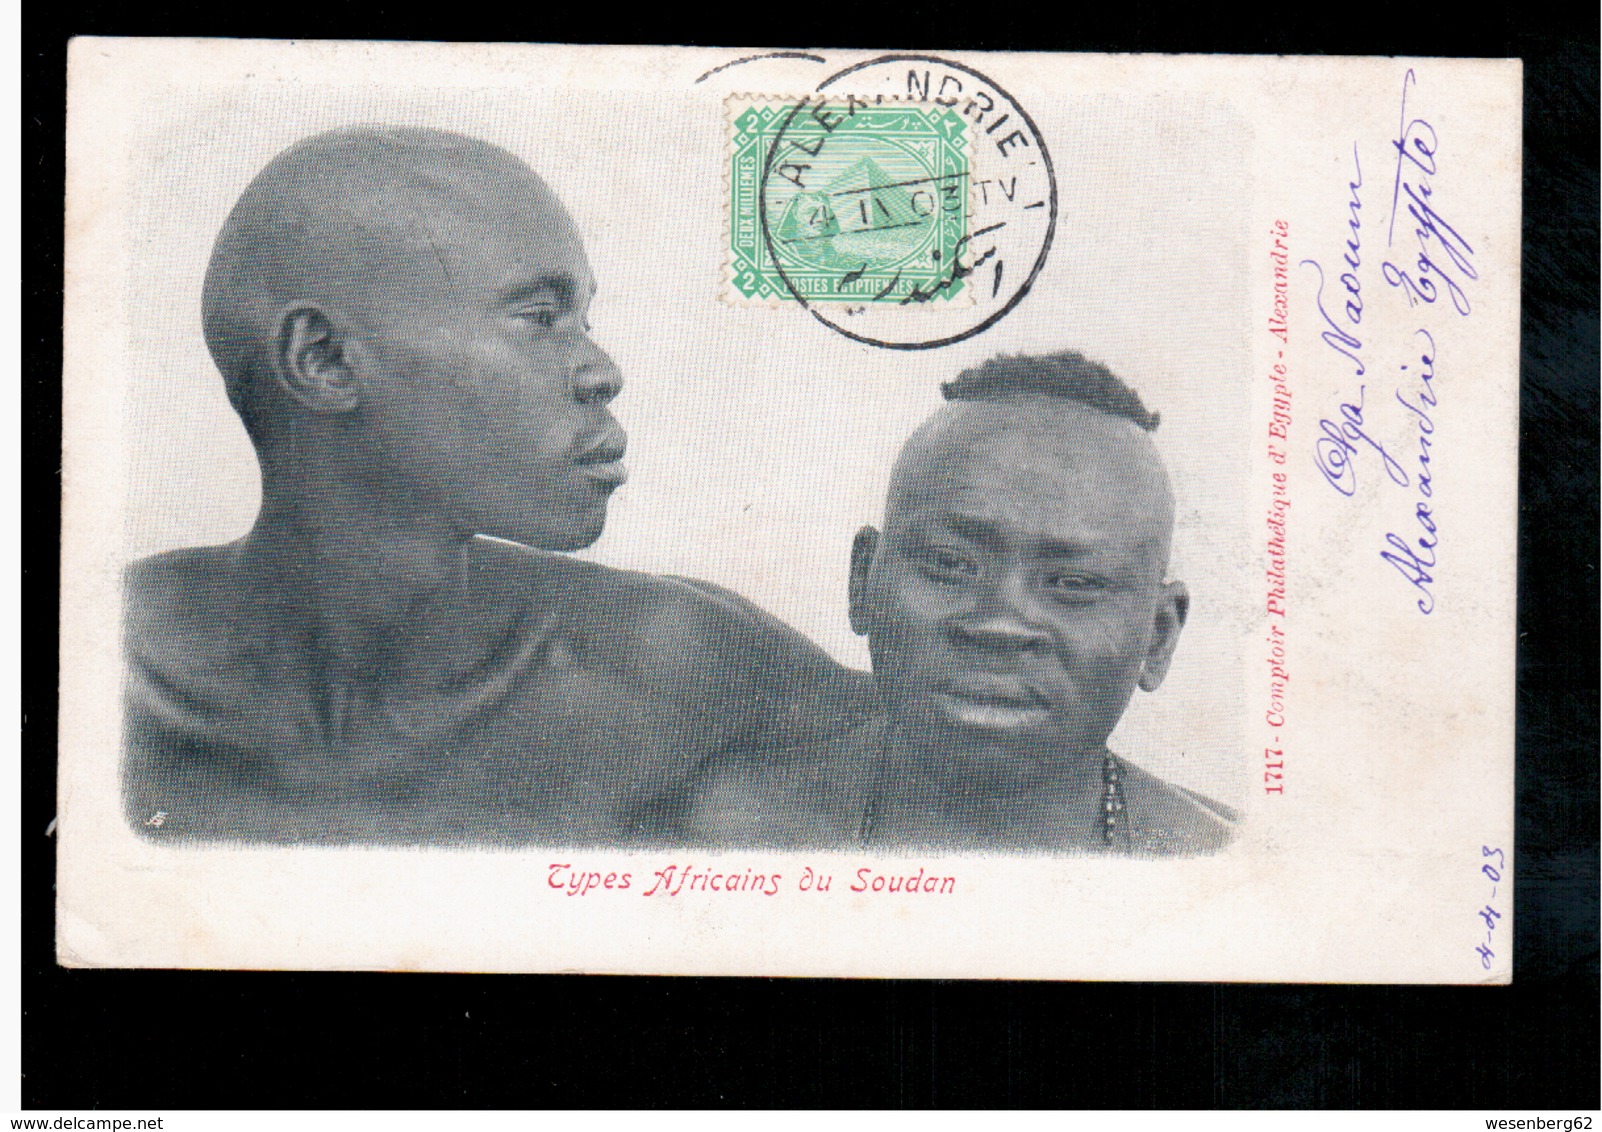 SOUDAN Types Africains Du Soudan 1903 Old Postcard - Sudan